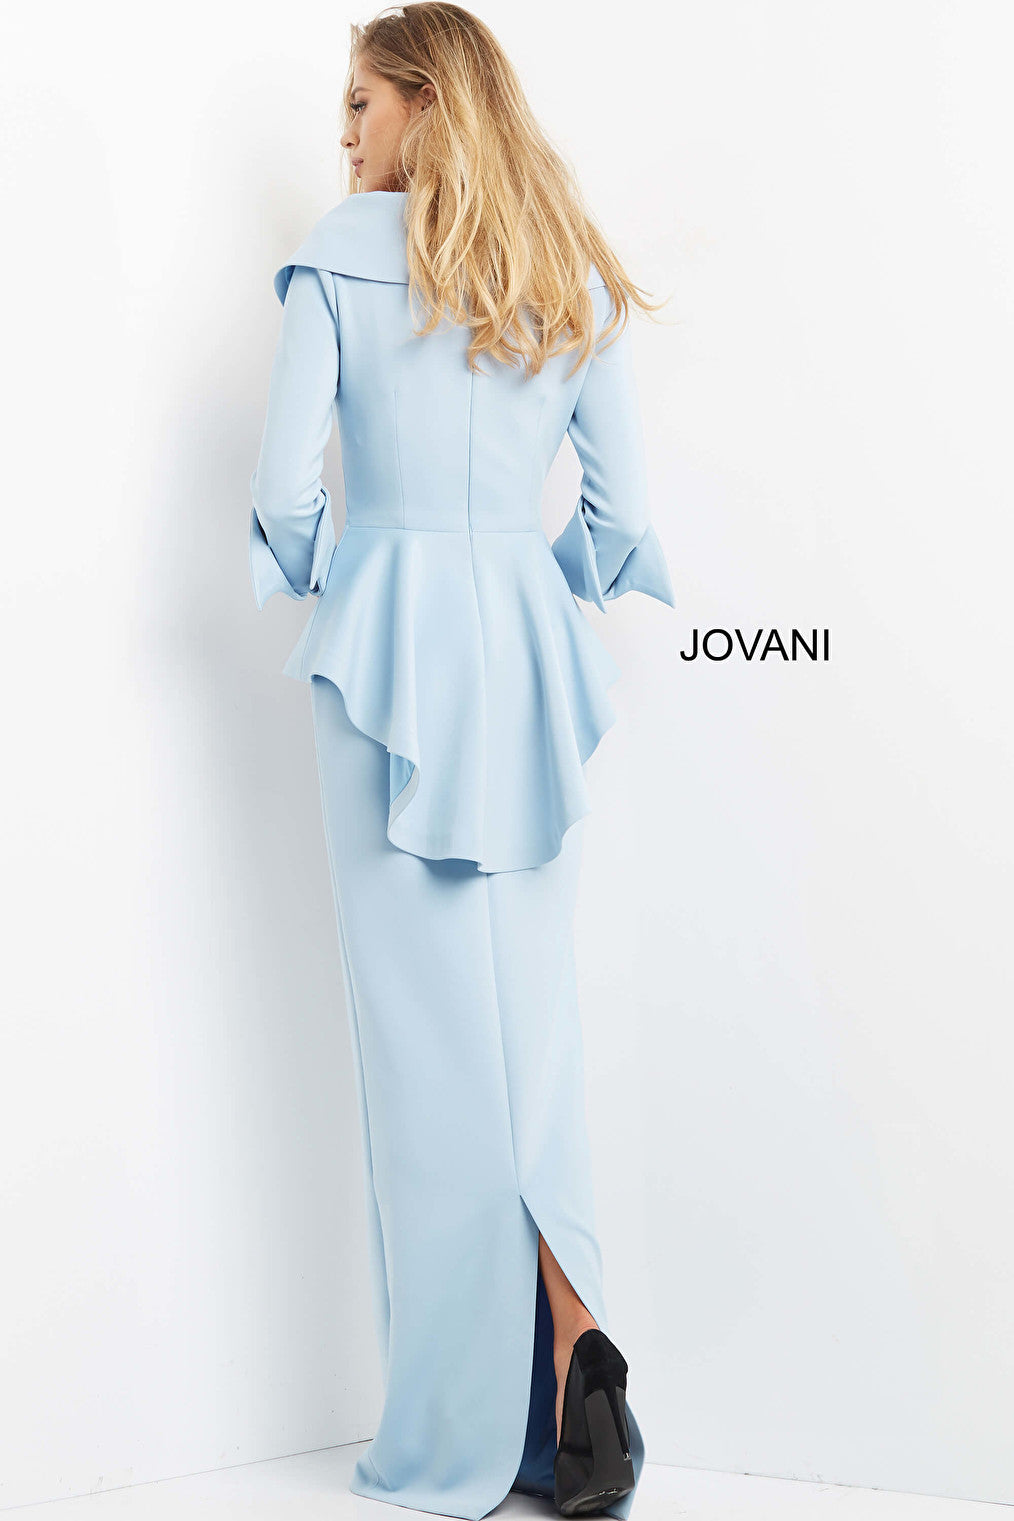 Jovani 07037 Light Blue